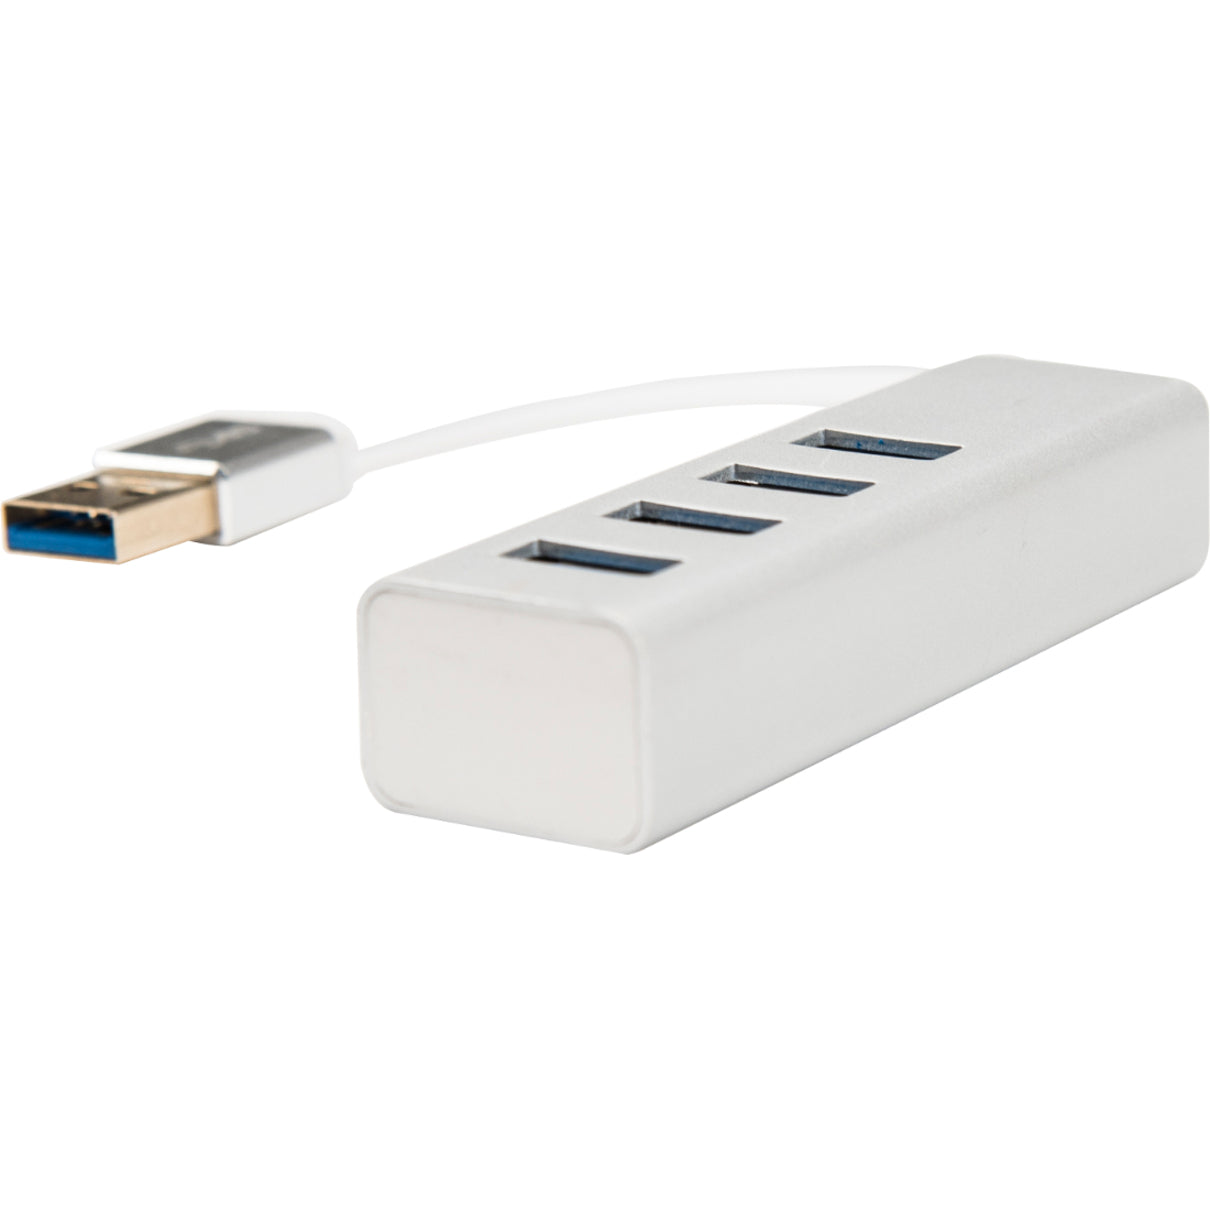 Rocstor Y10A216-S1 6 in Portable 4 Port SuperSpeed Mini USB 3.0 Hub, Aluminum Silver